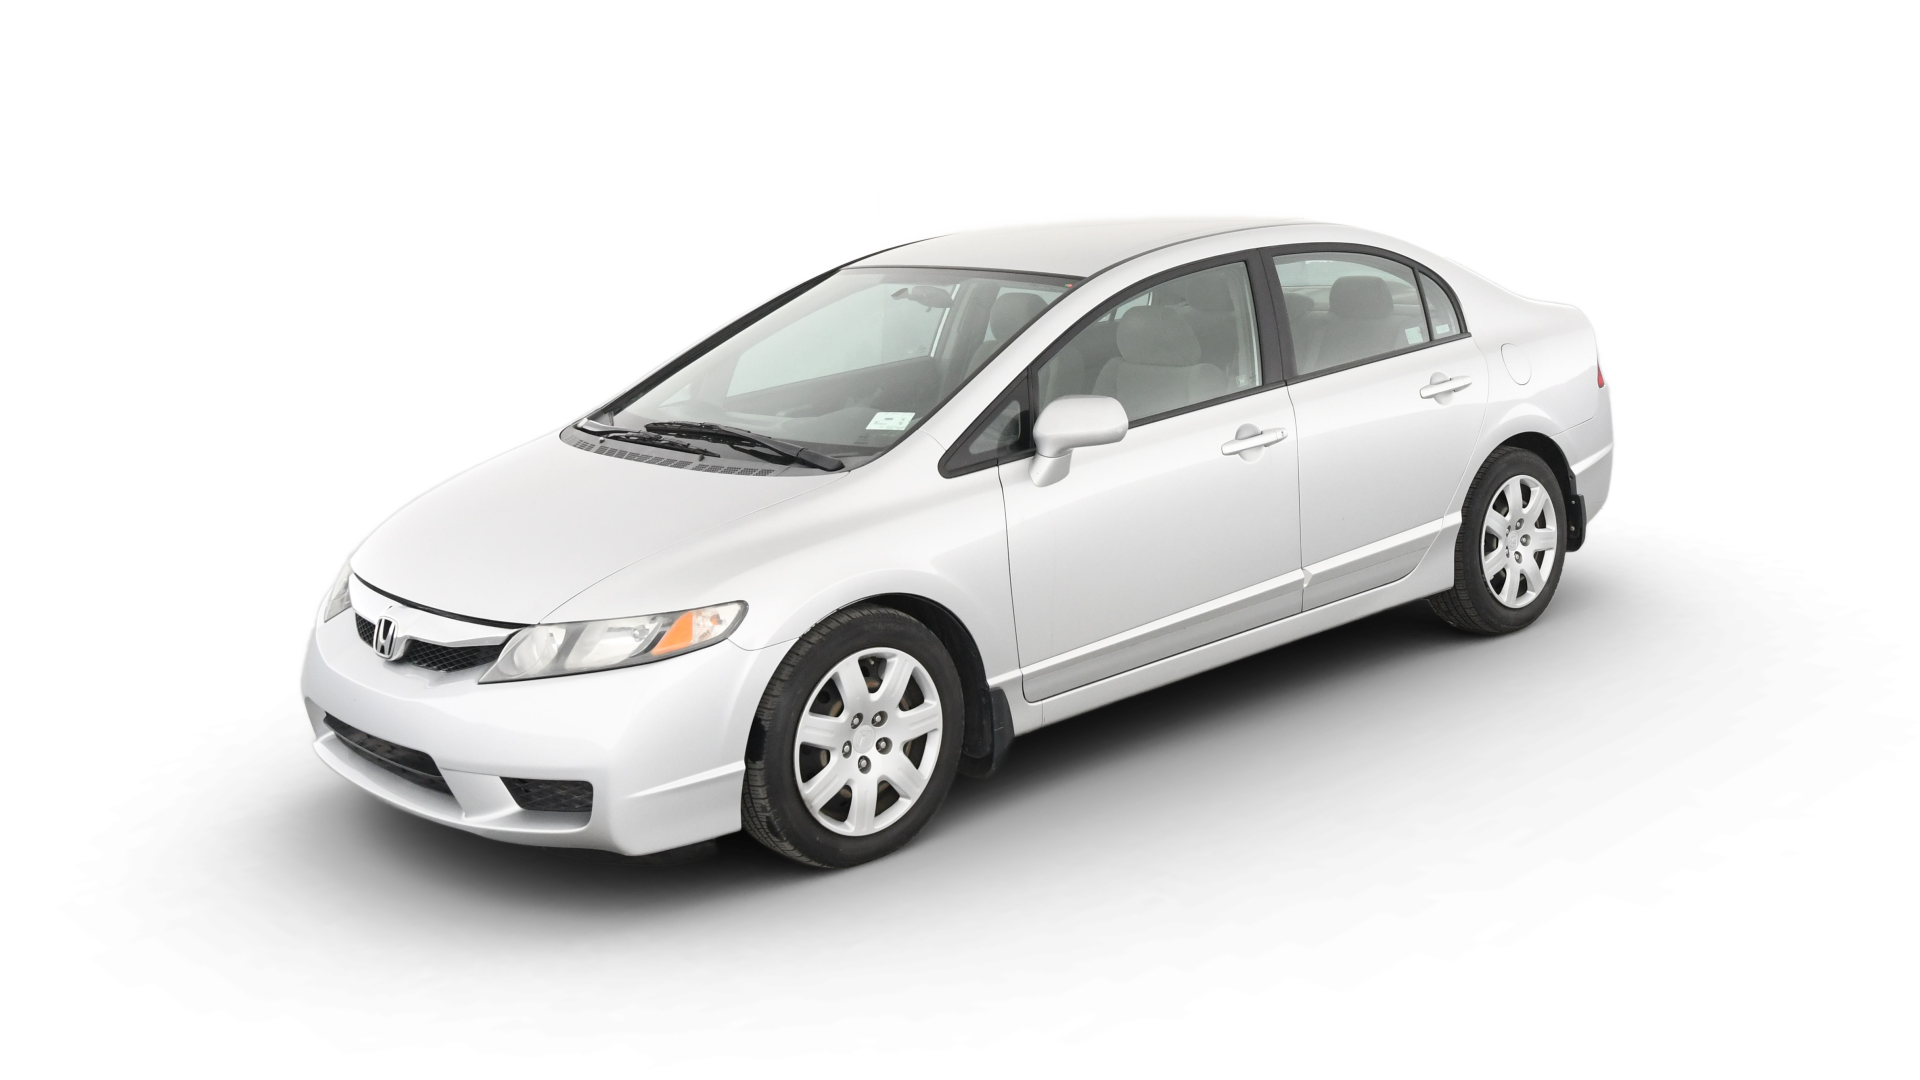 Used Honda Civic For Sale Online | Carvana